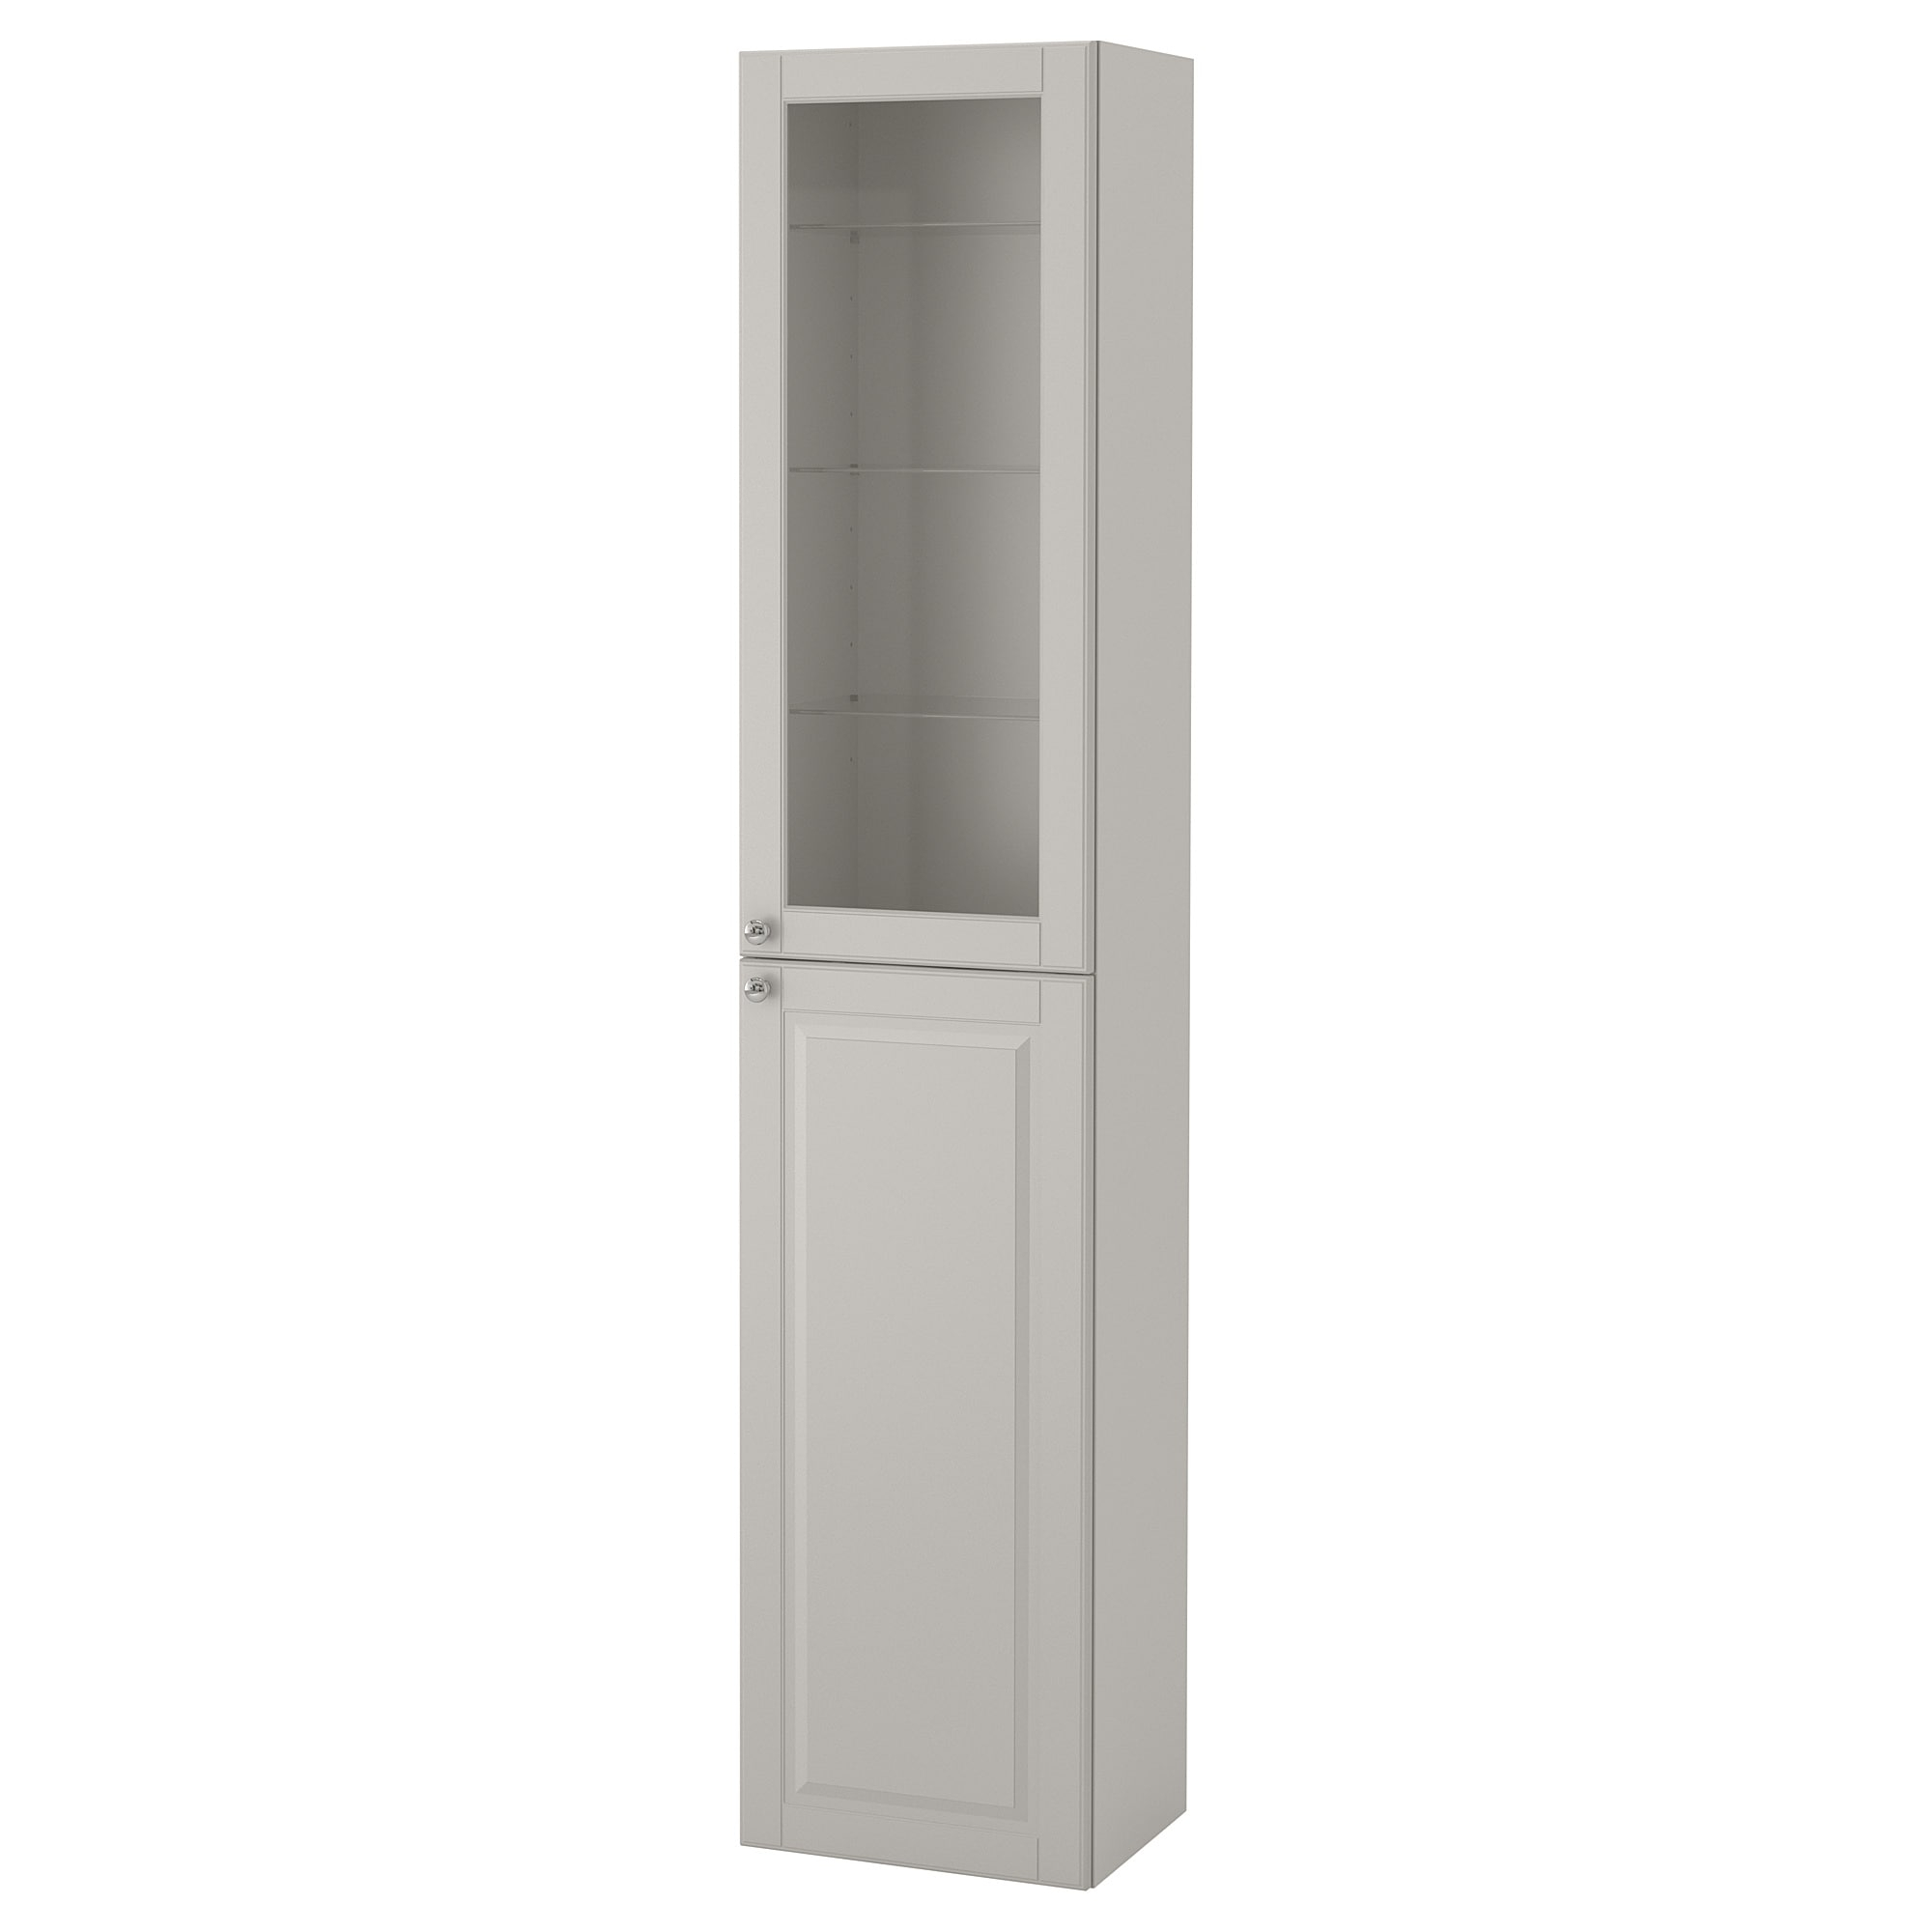 Wicker Bathroom Storage Cabinets Cabinet Ideas regarding measurements 2000 X 2000